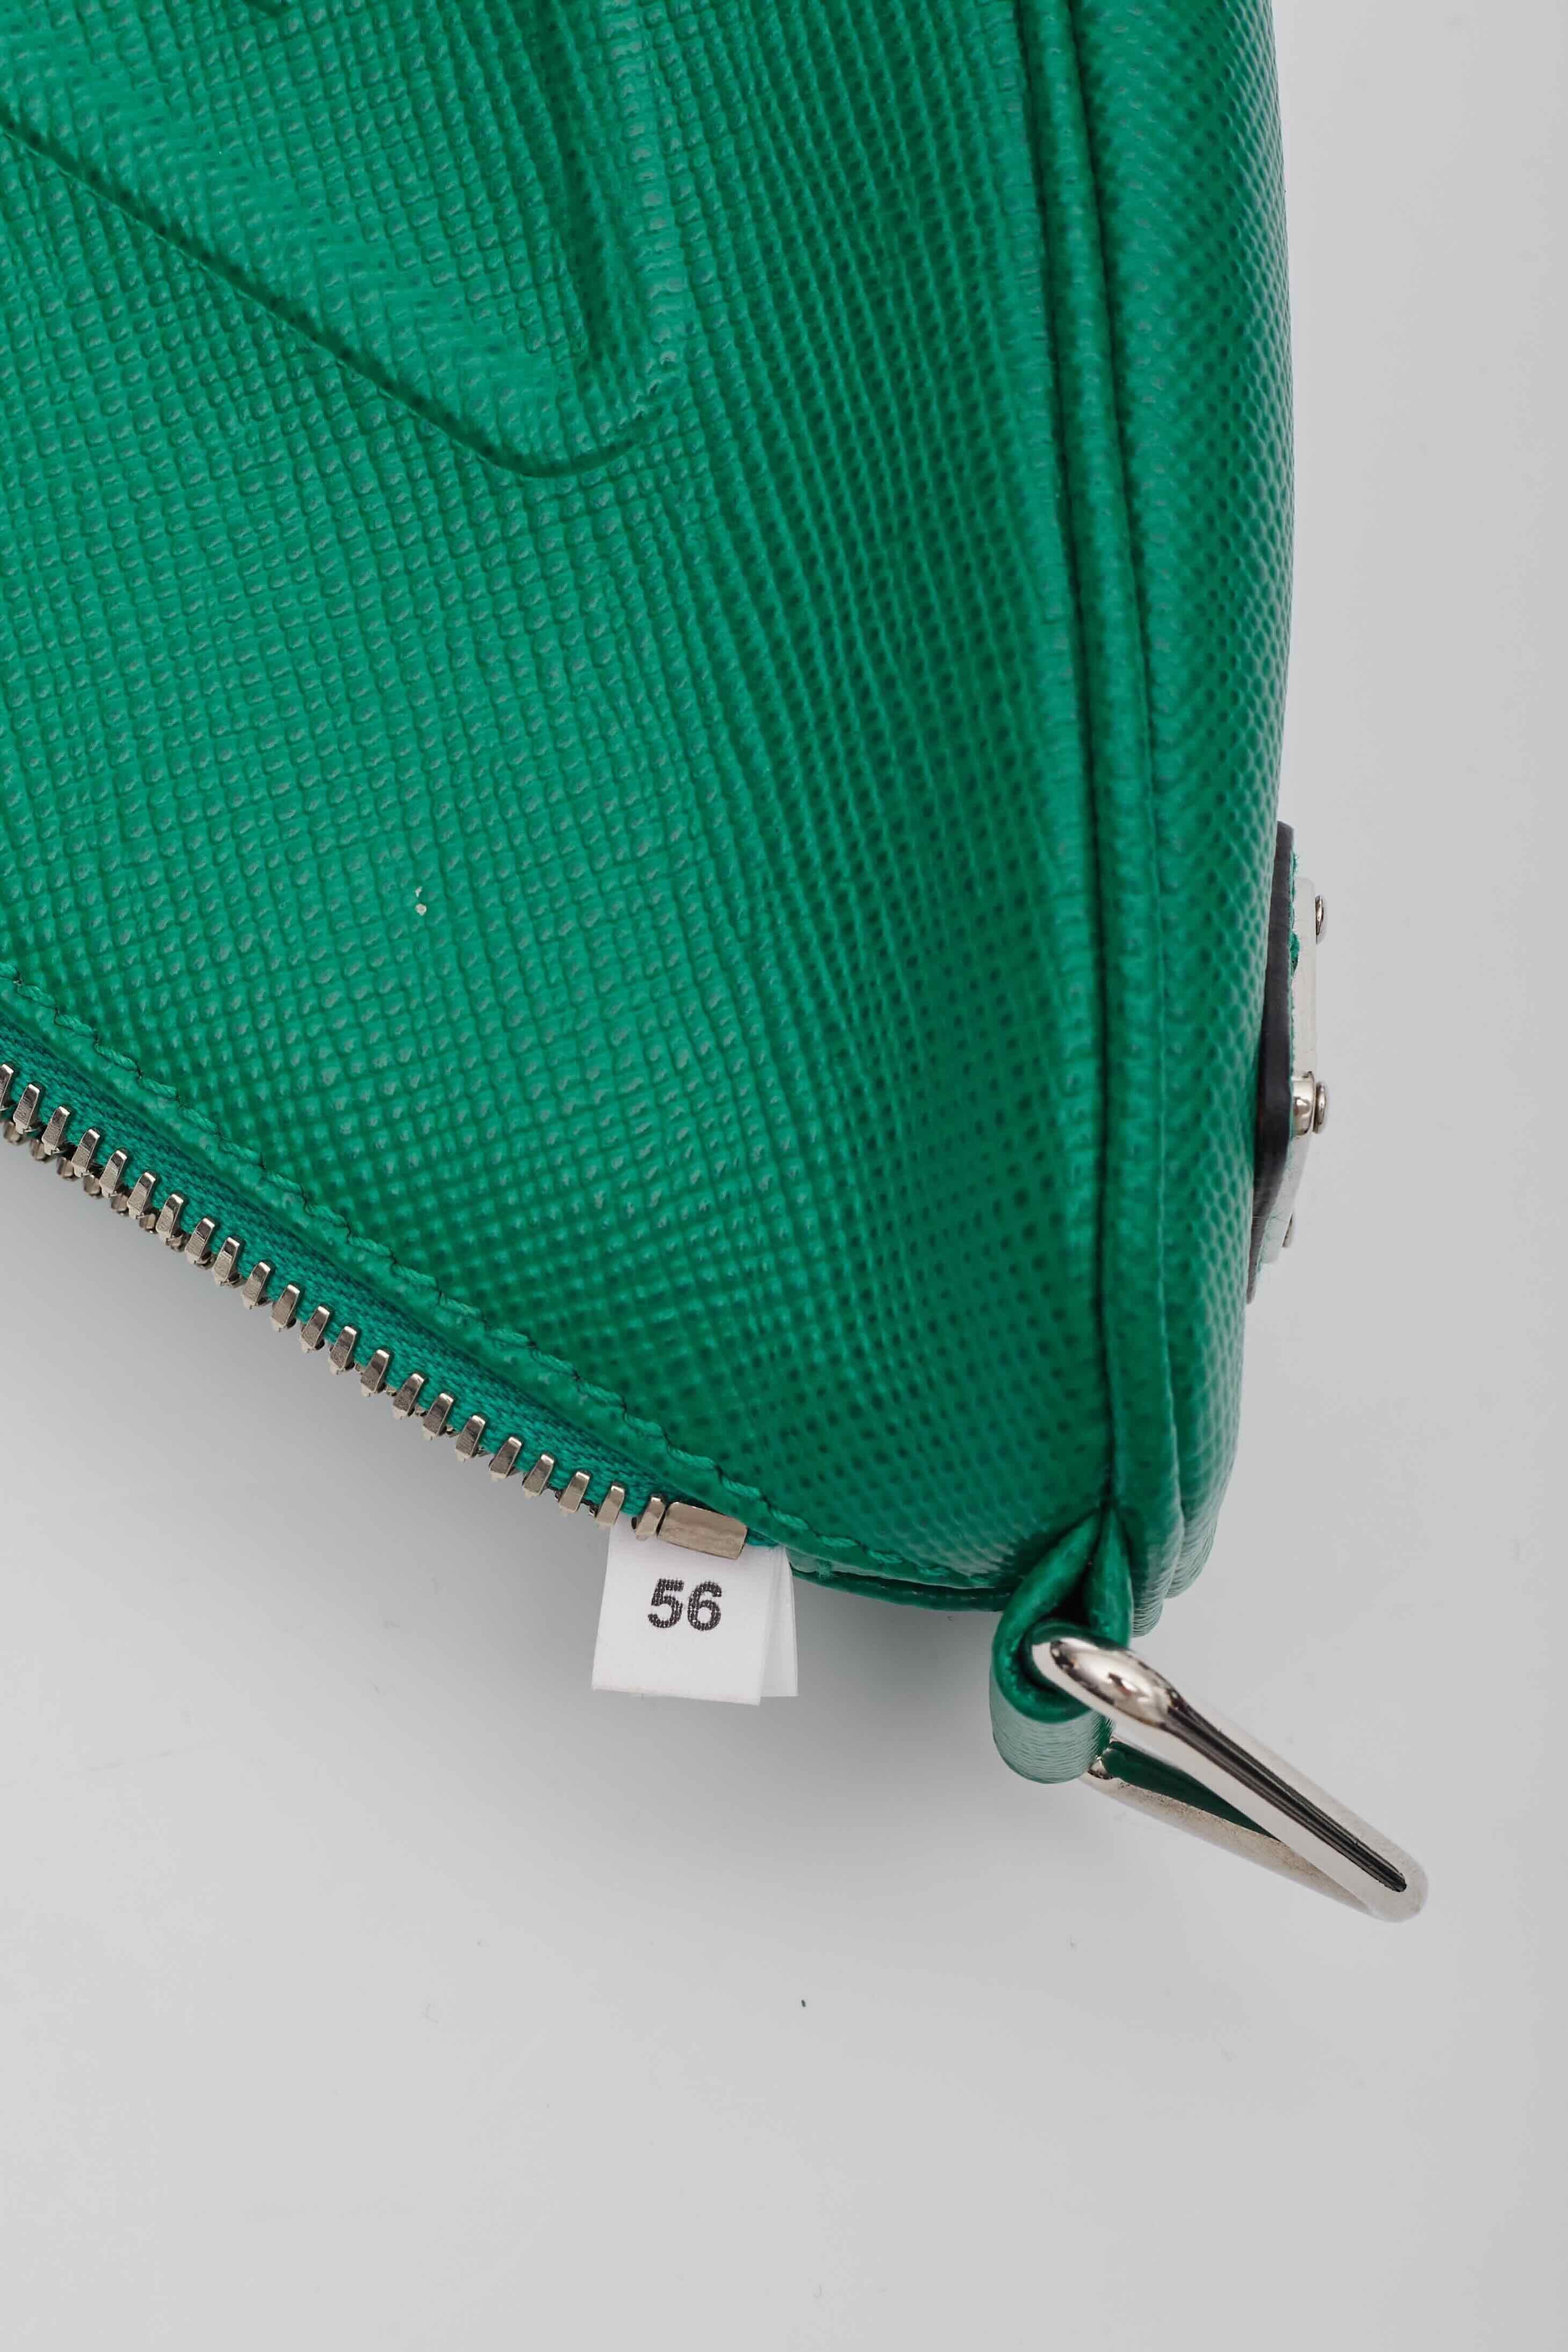 Prada Saffiano Leather Mango Green Triangle Logo Pouch Bag For Sale 4